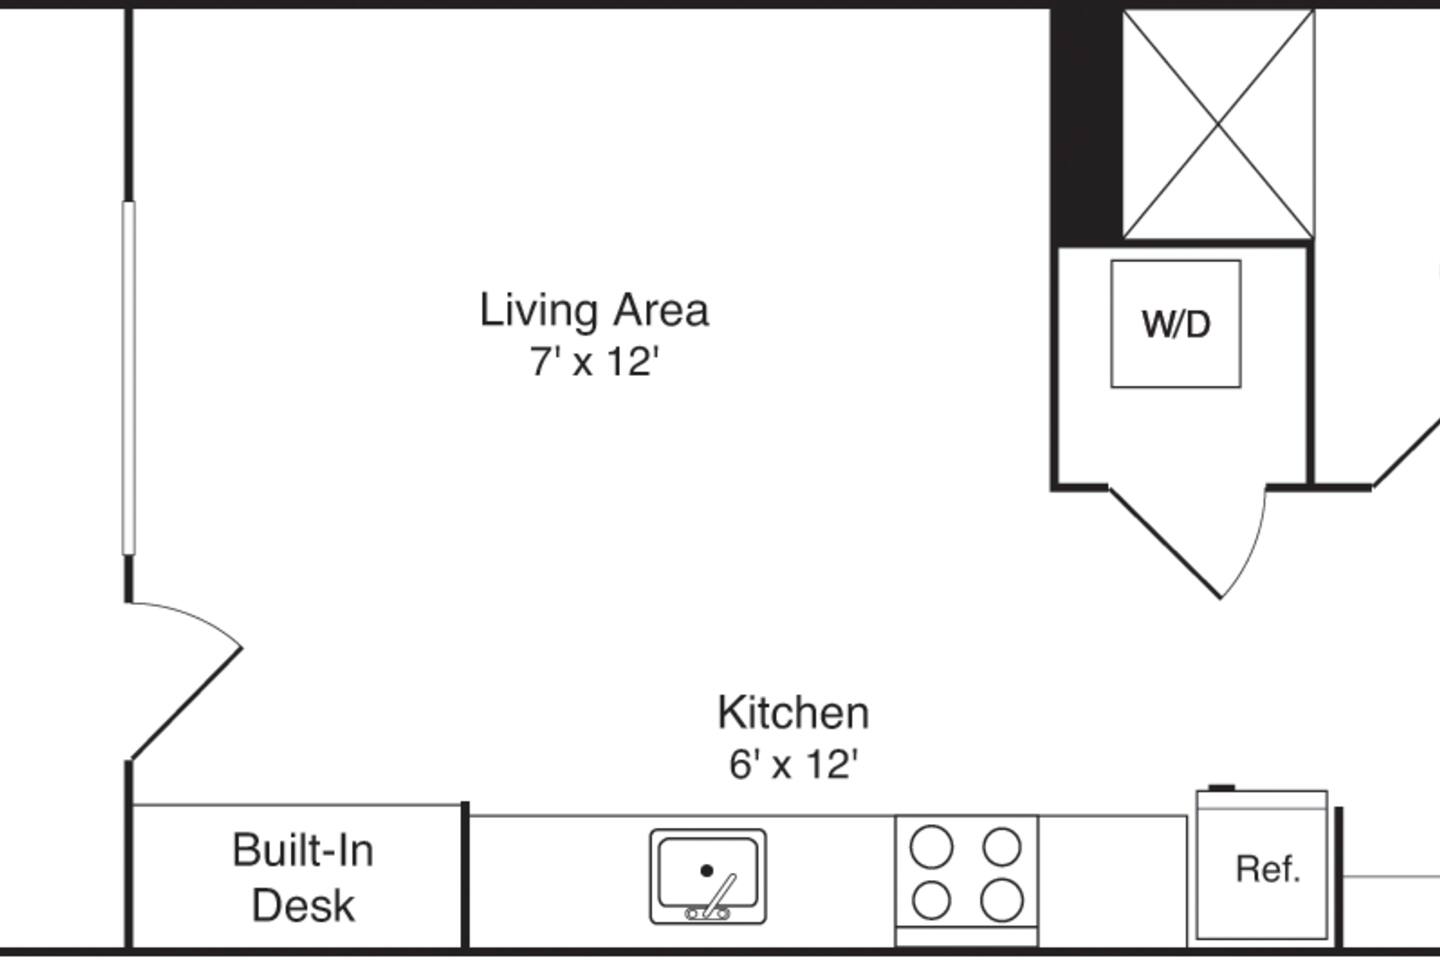 Floorplan diagram for M1, showing Studio